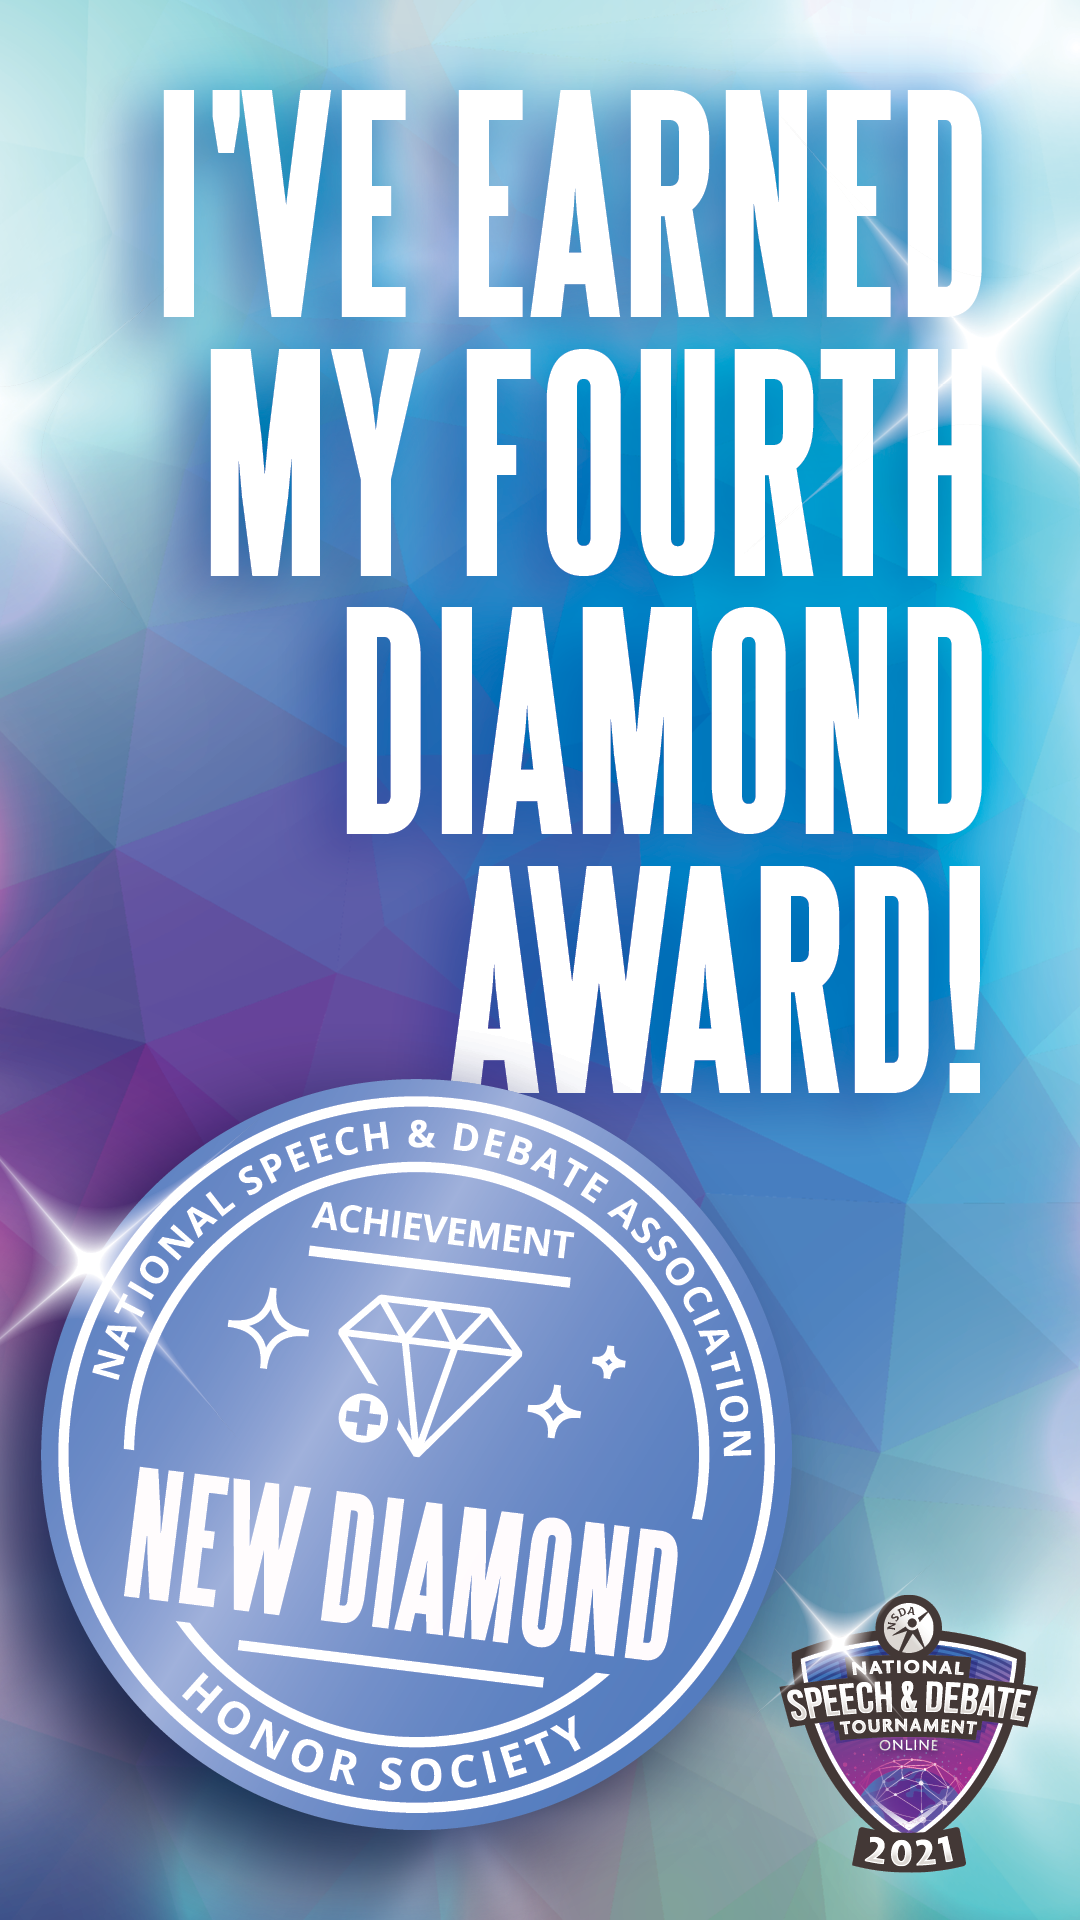 I've Earned My Fourth Diamond Award!